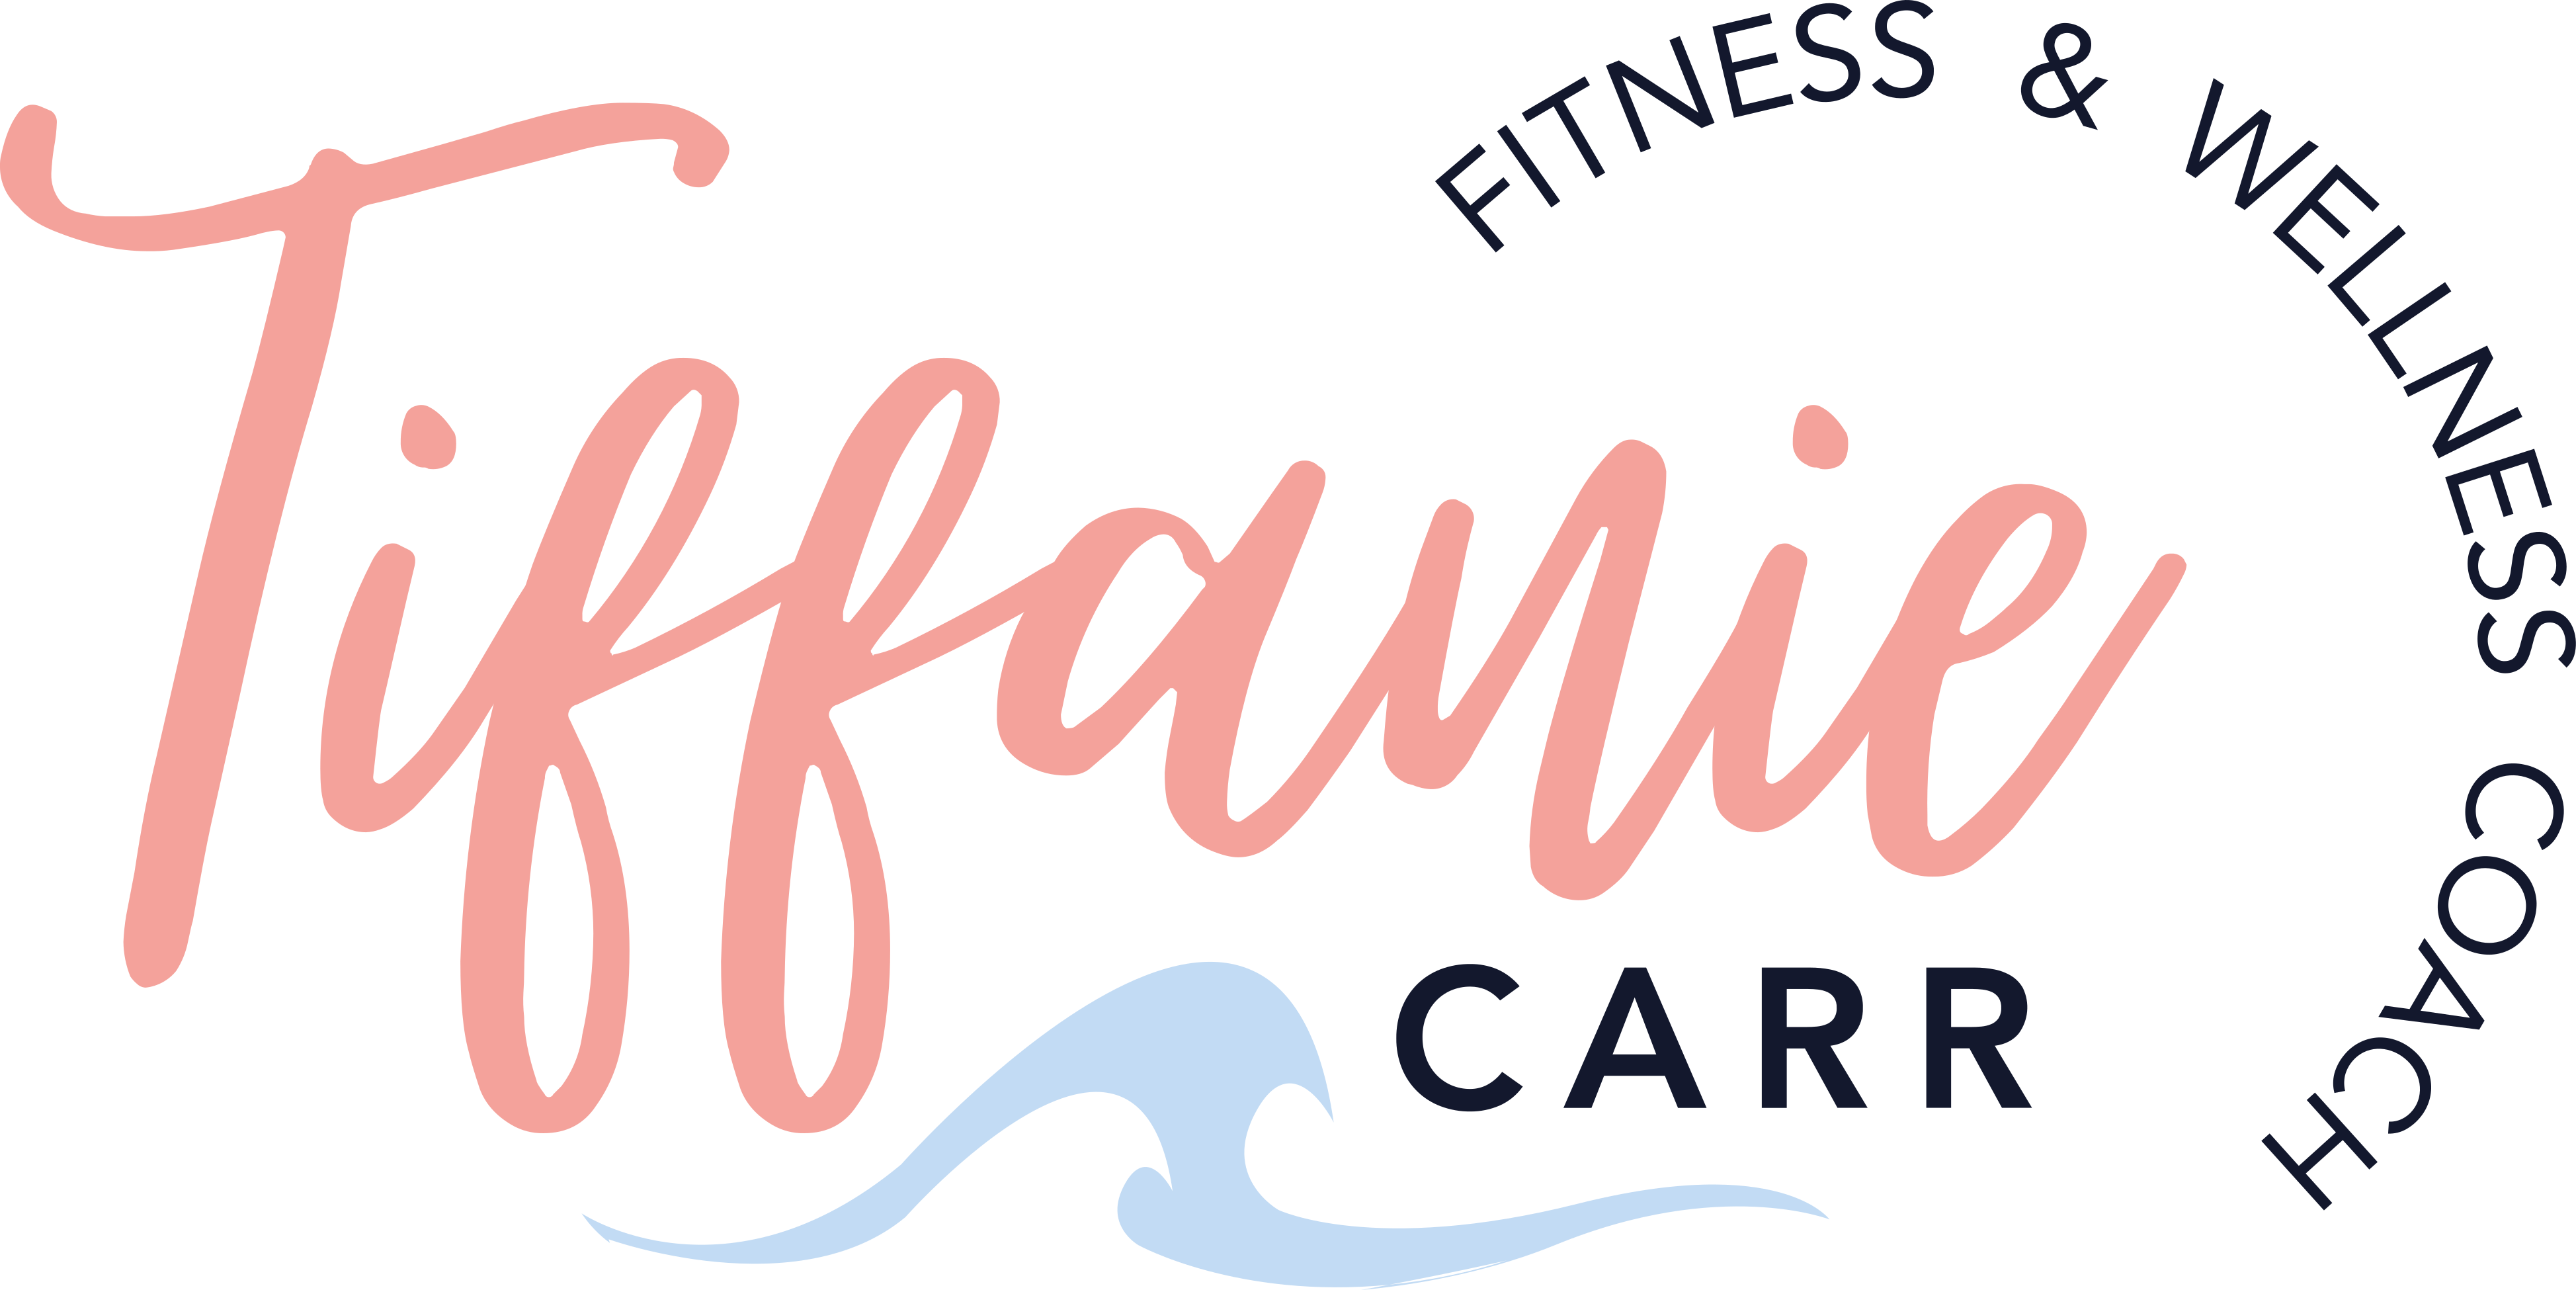 Tiffanie Carr Wellness Coach Logo Horizontal